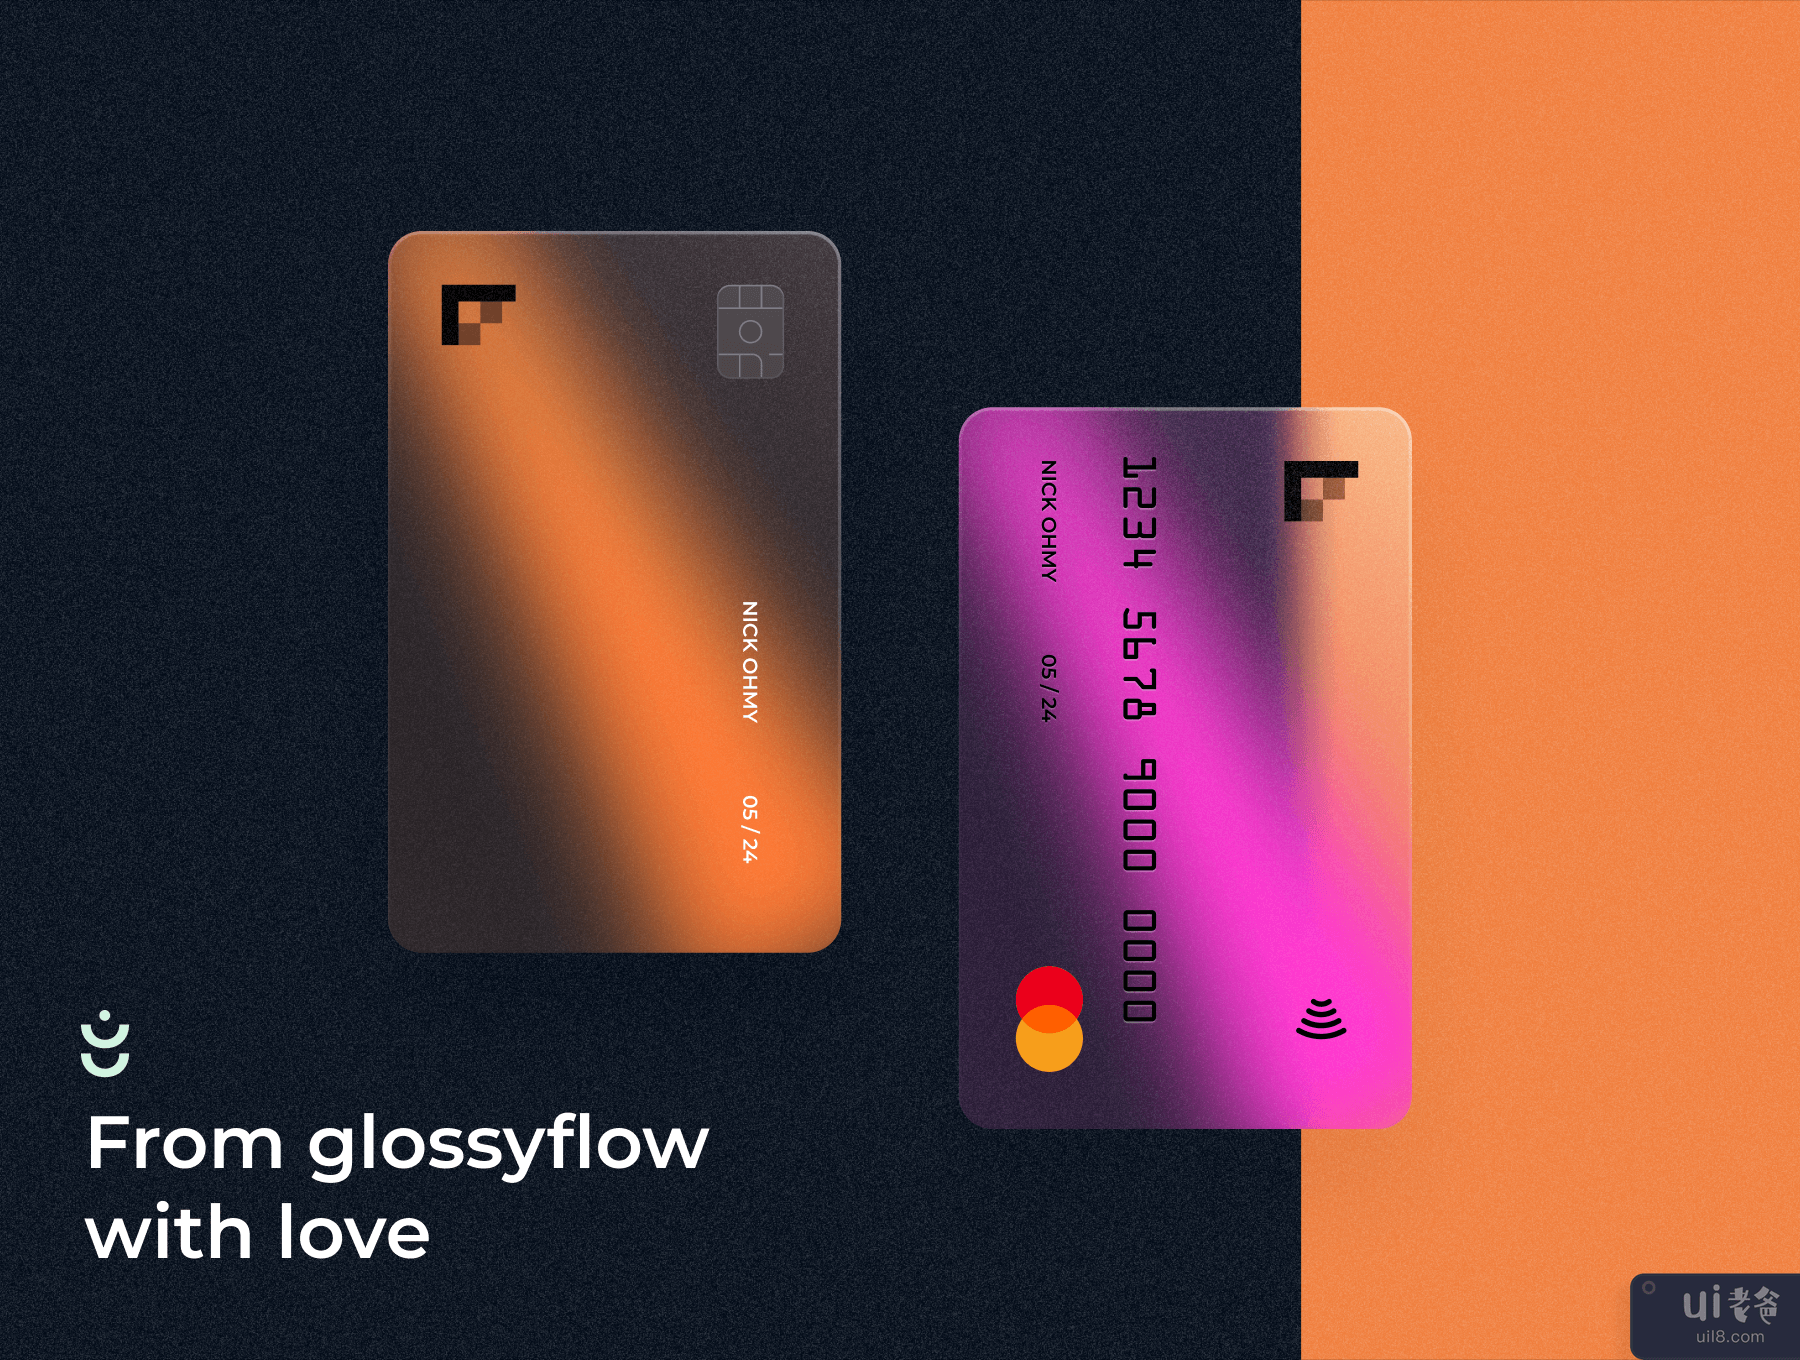 Figma 光面银行卡套件(Glossy Bank Card Kit for Figma)插图2